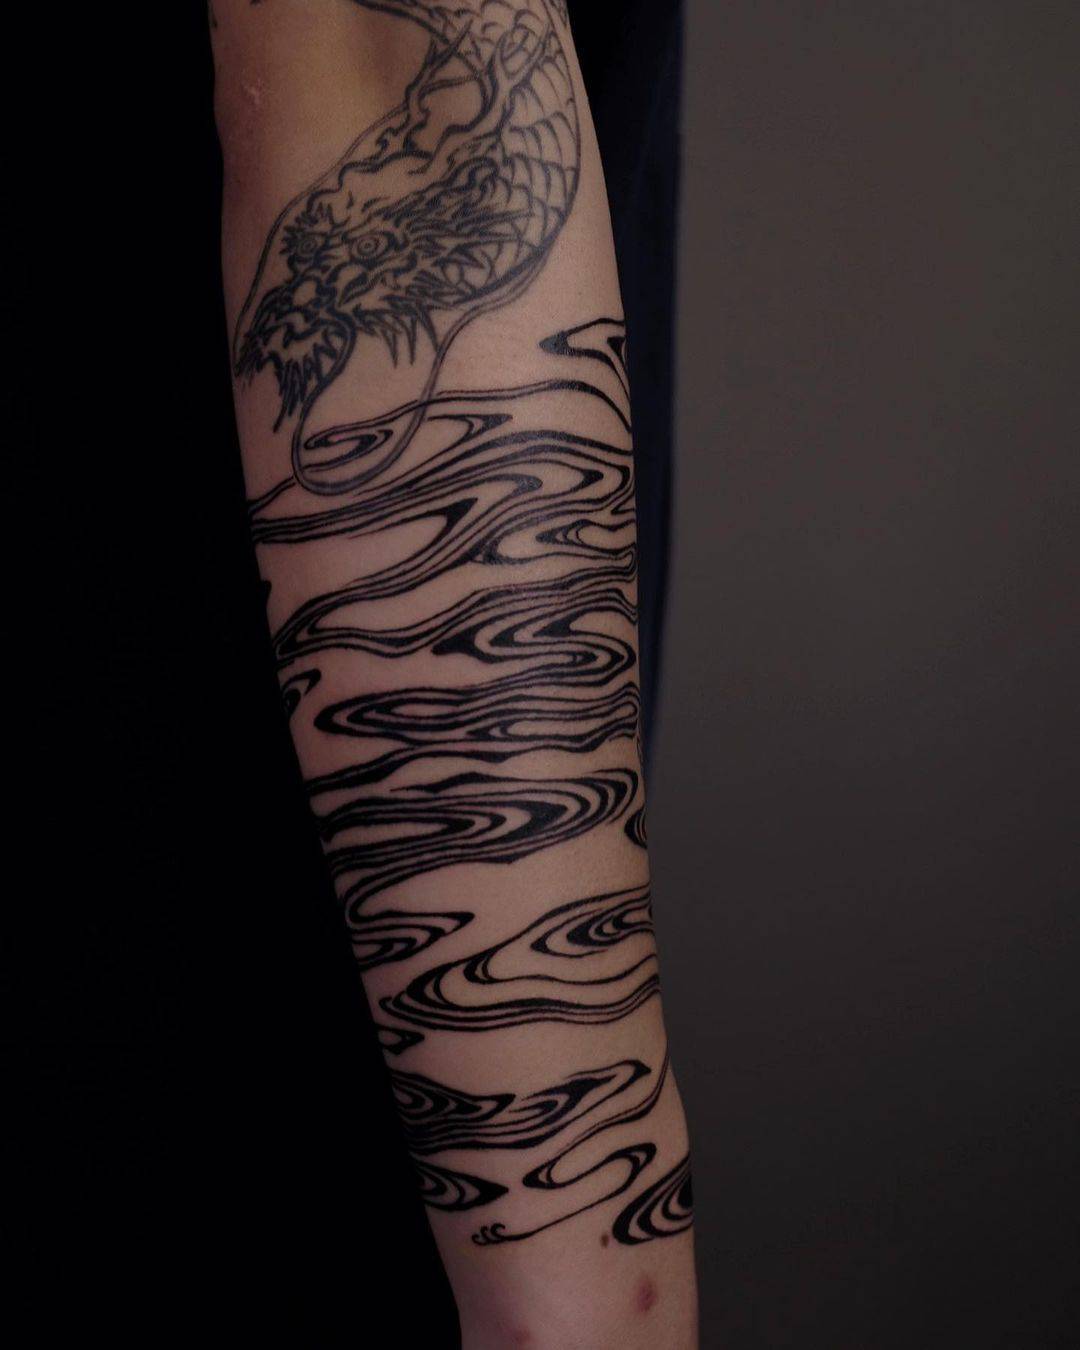 Arm tattoo design by